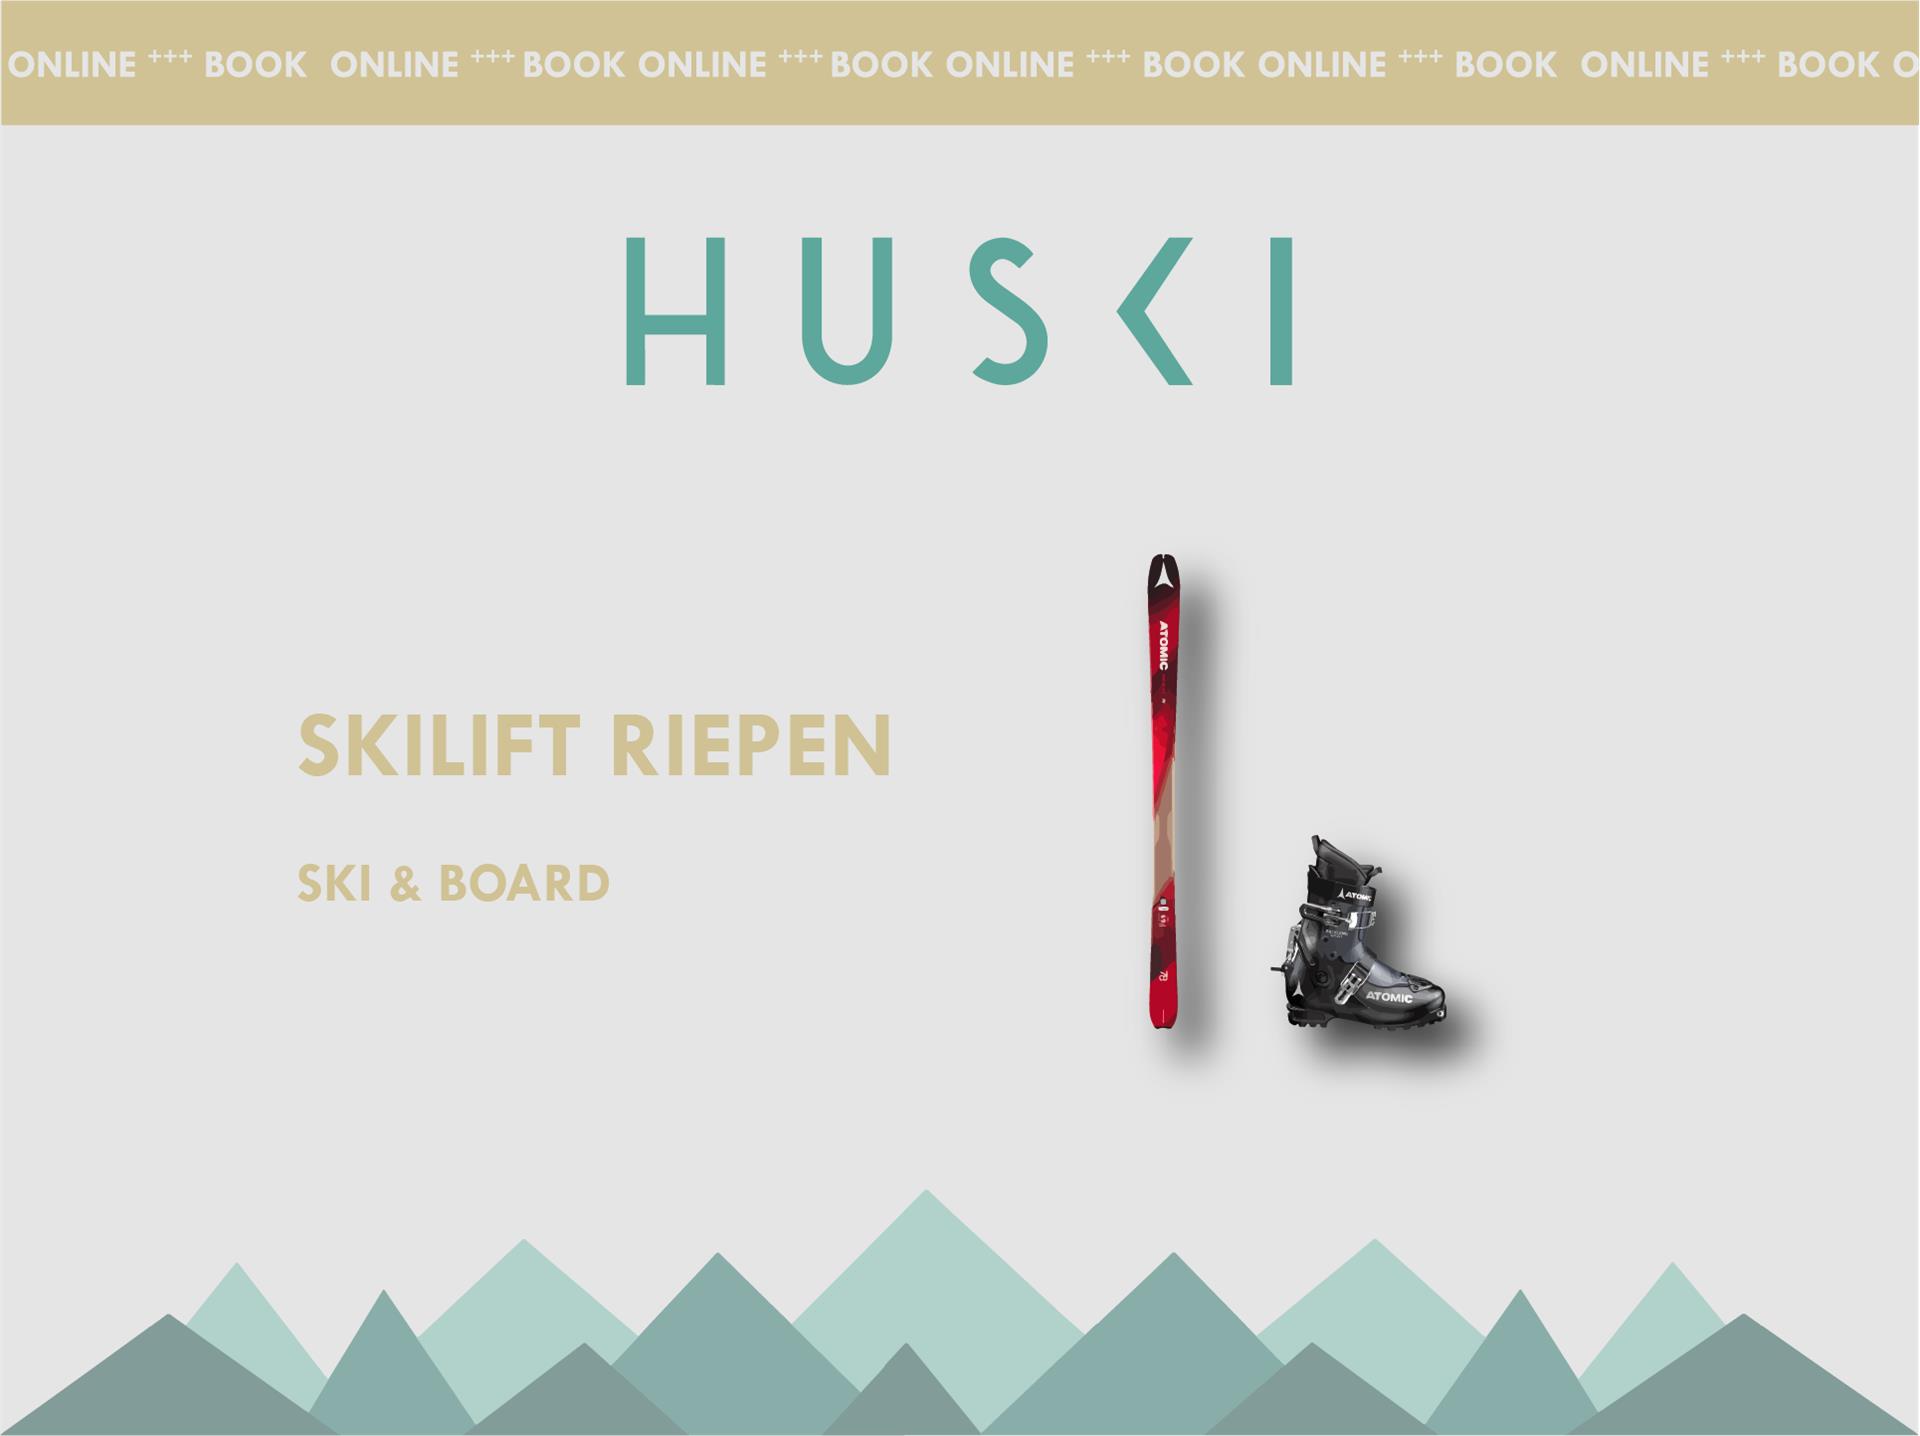 Huski Rent a Ski | Antholz skilift Riepen